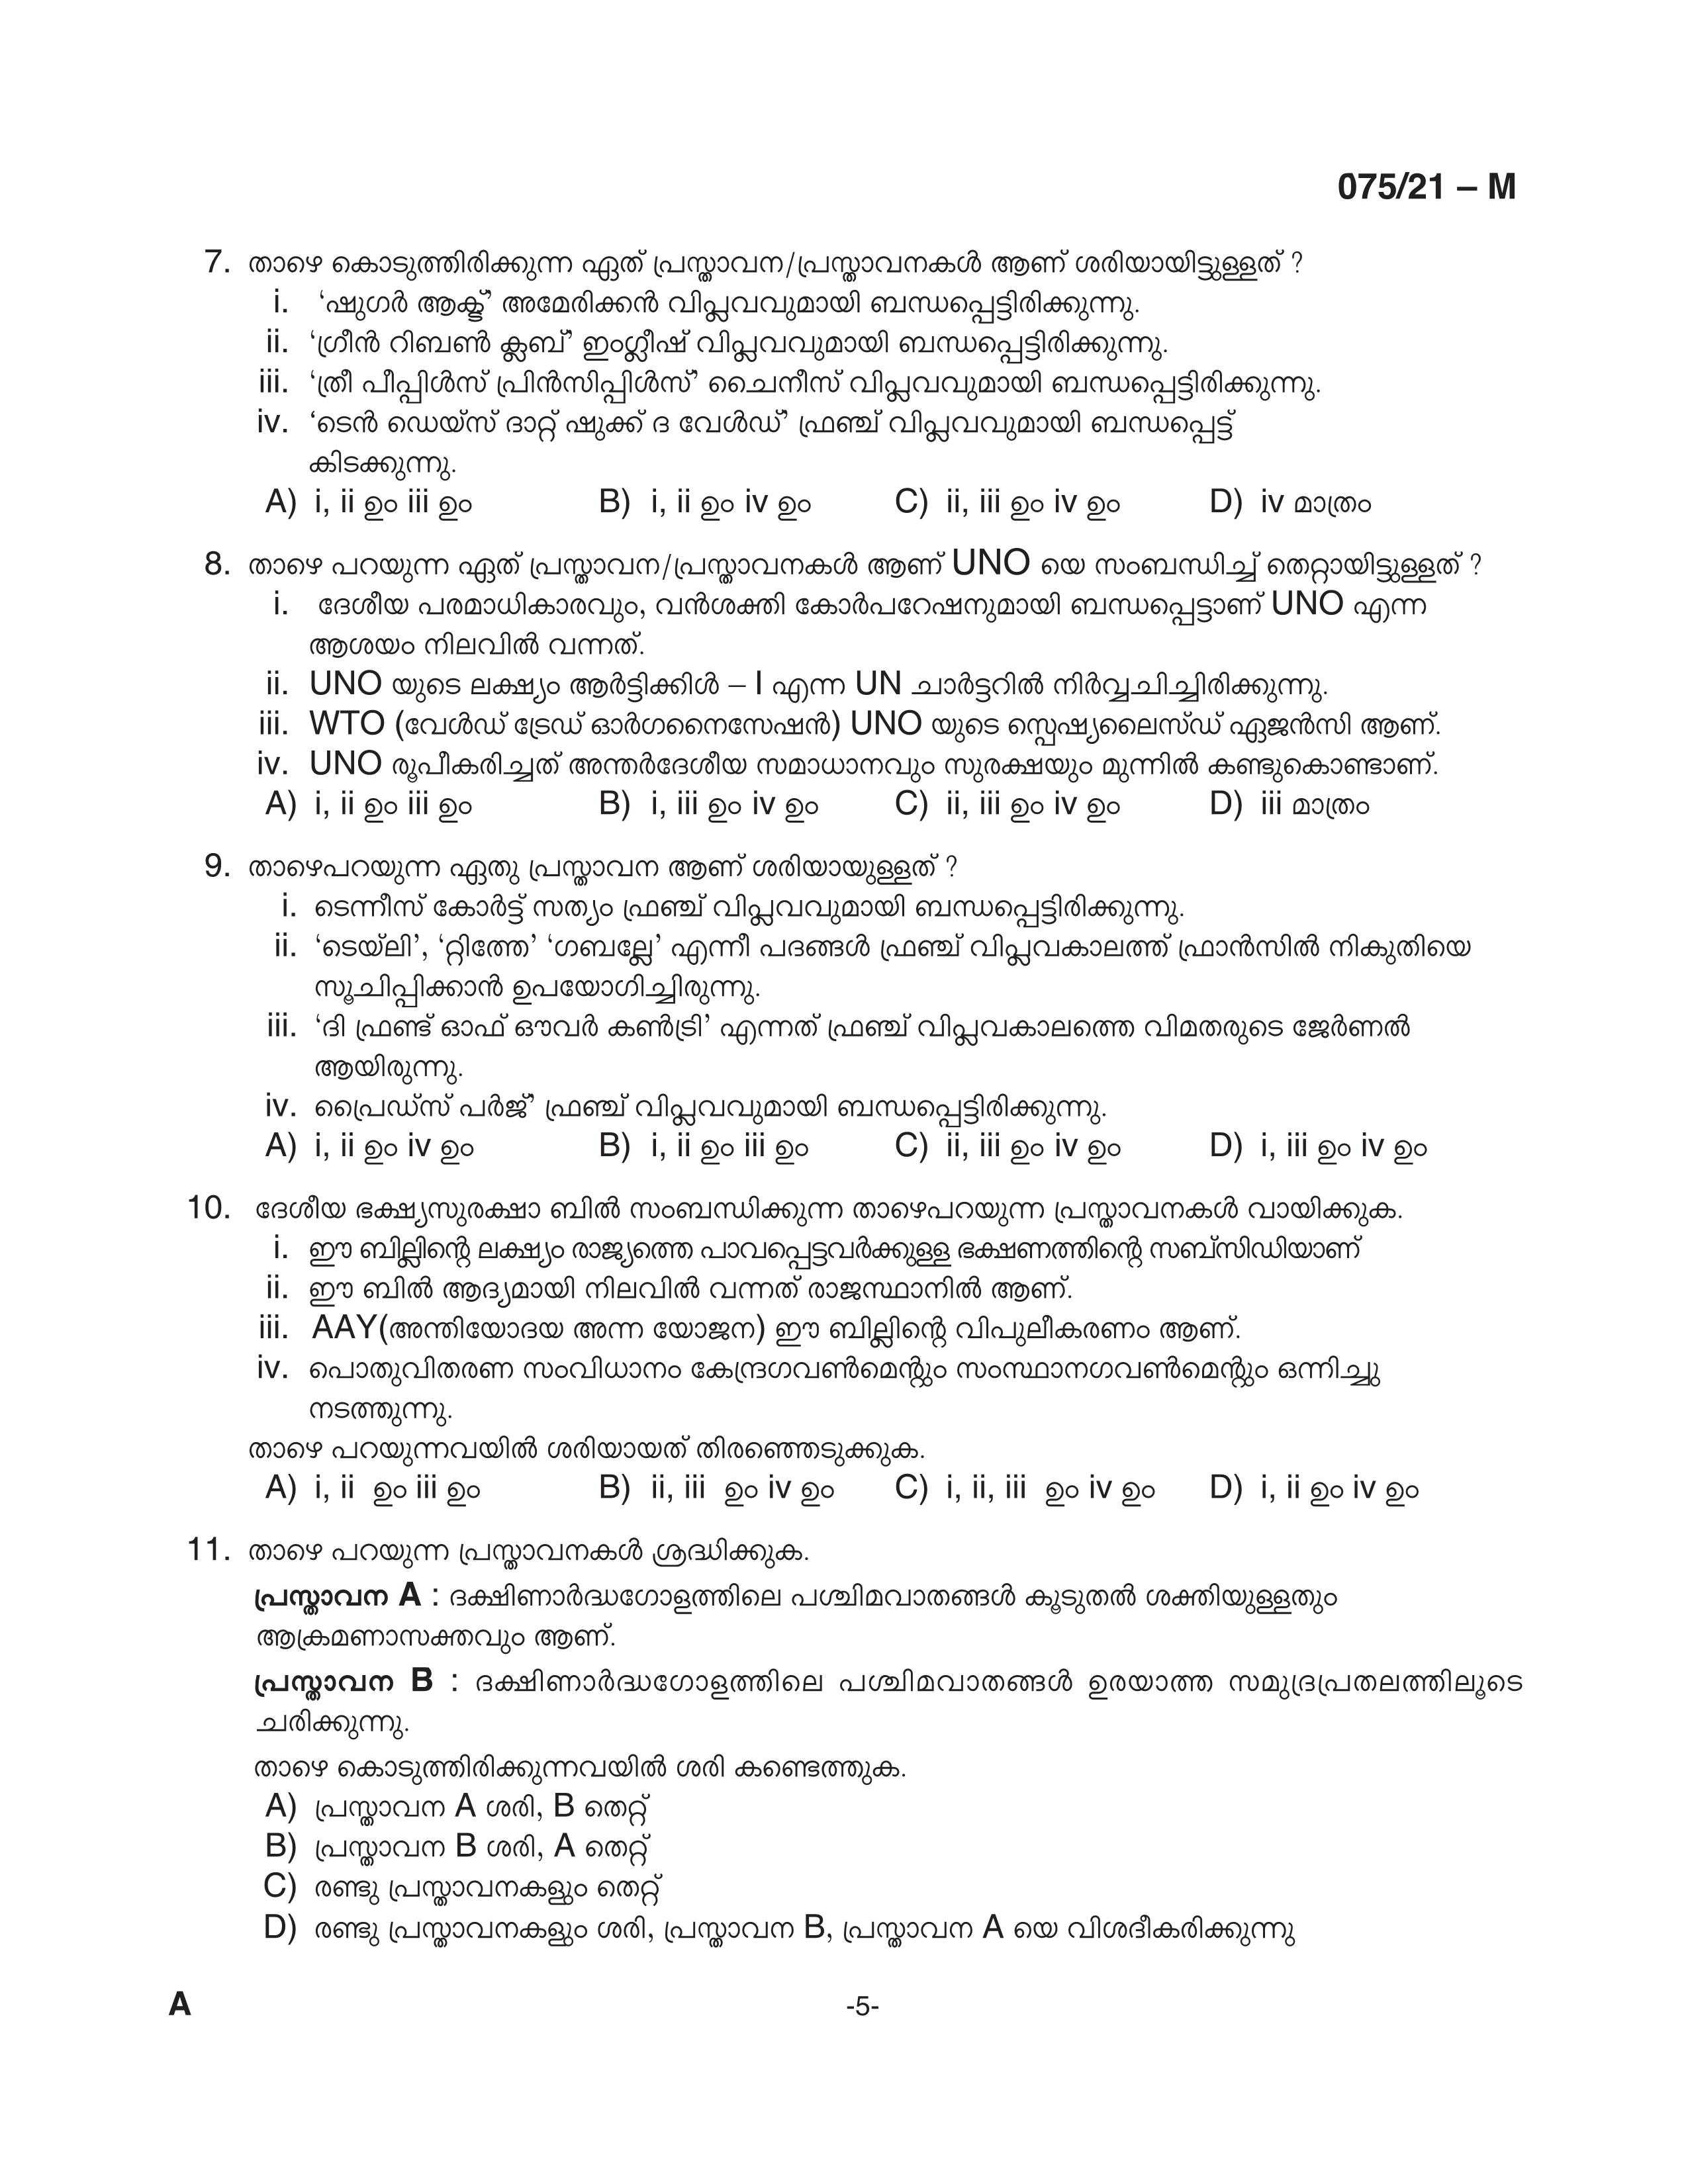 KPSC Degree Level Preliminary Exam Stage I Malayalam 2021 Code 07521 M 5